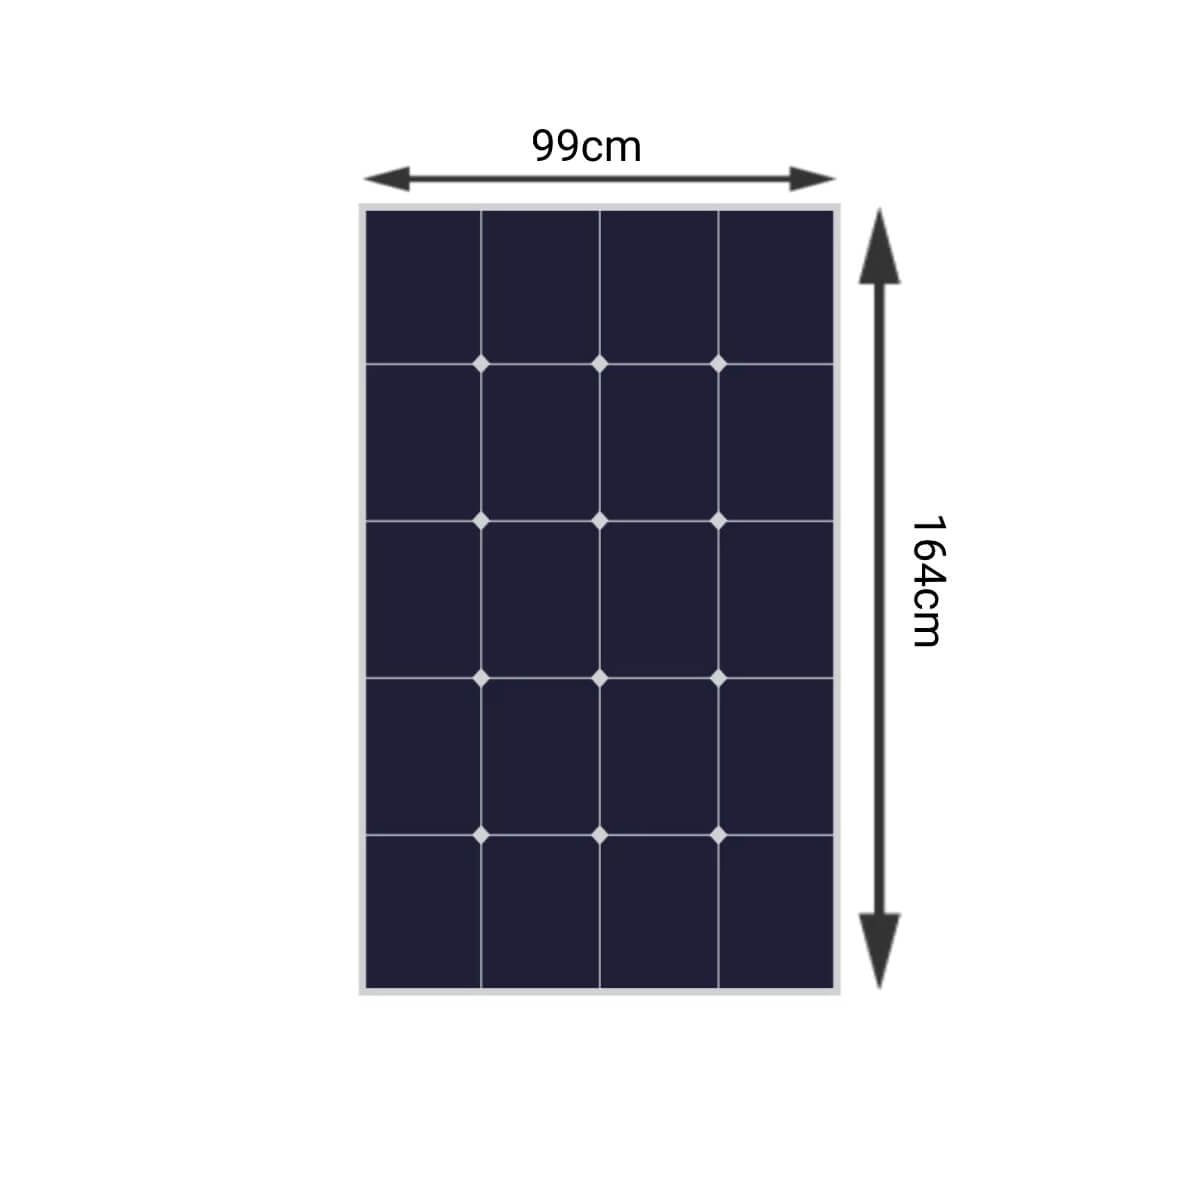 300W Solar Panel Kit – 1x 300W dimensions